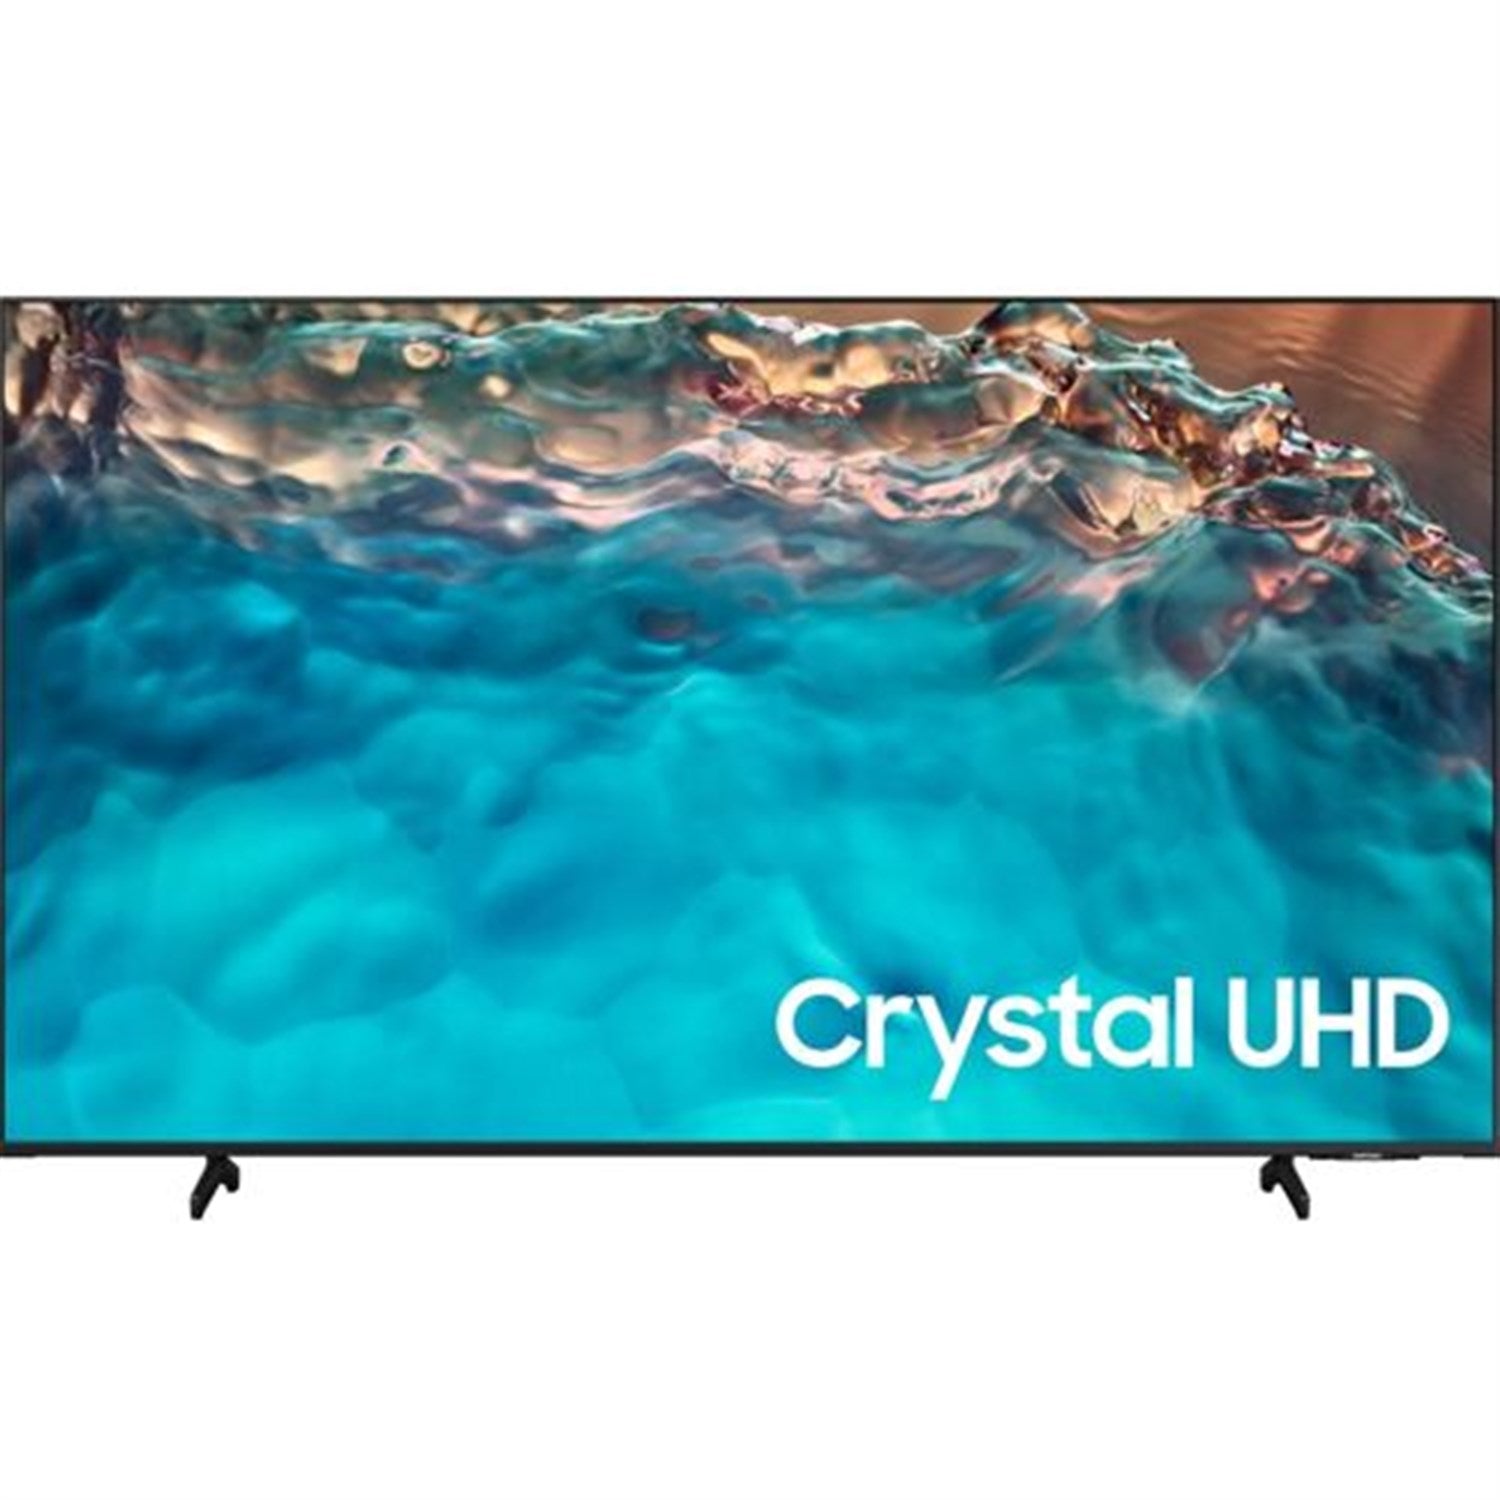 Samsung - 55"LED 4K UHD Crystal Display Pro:idiom 3840x2160